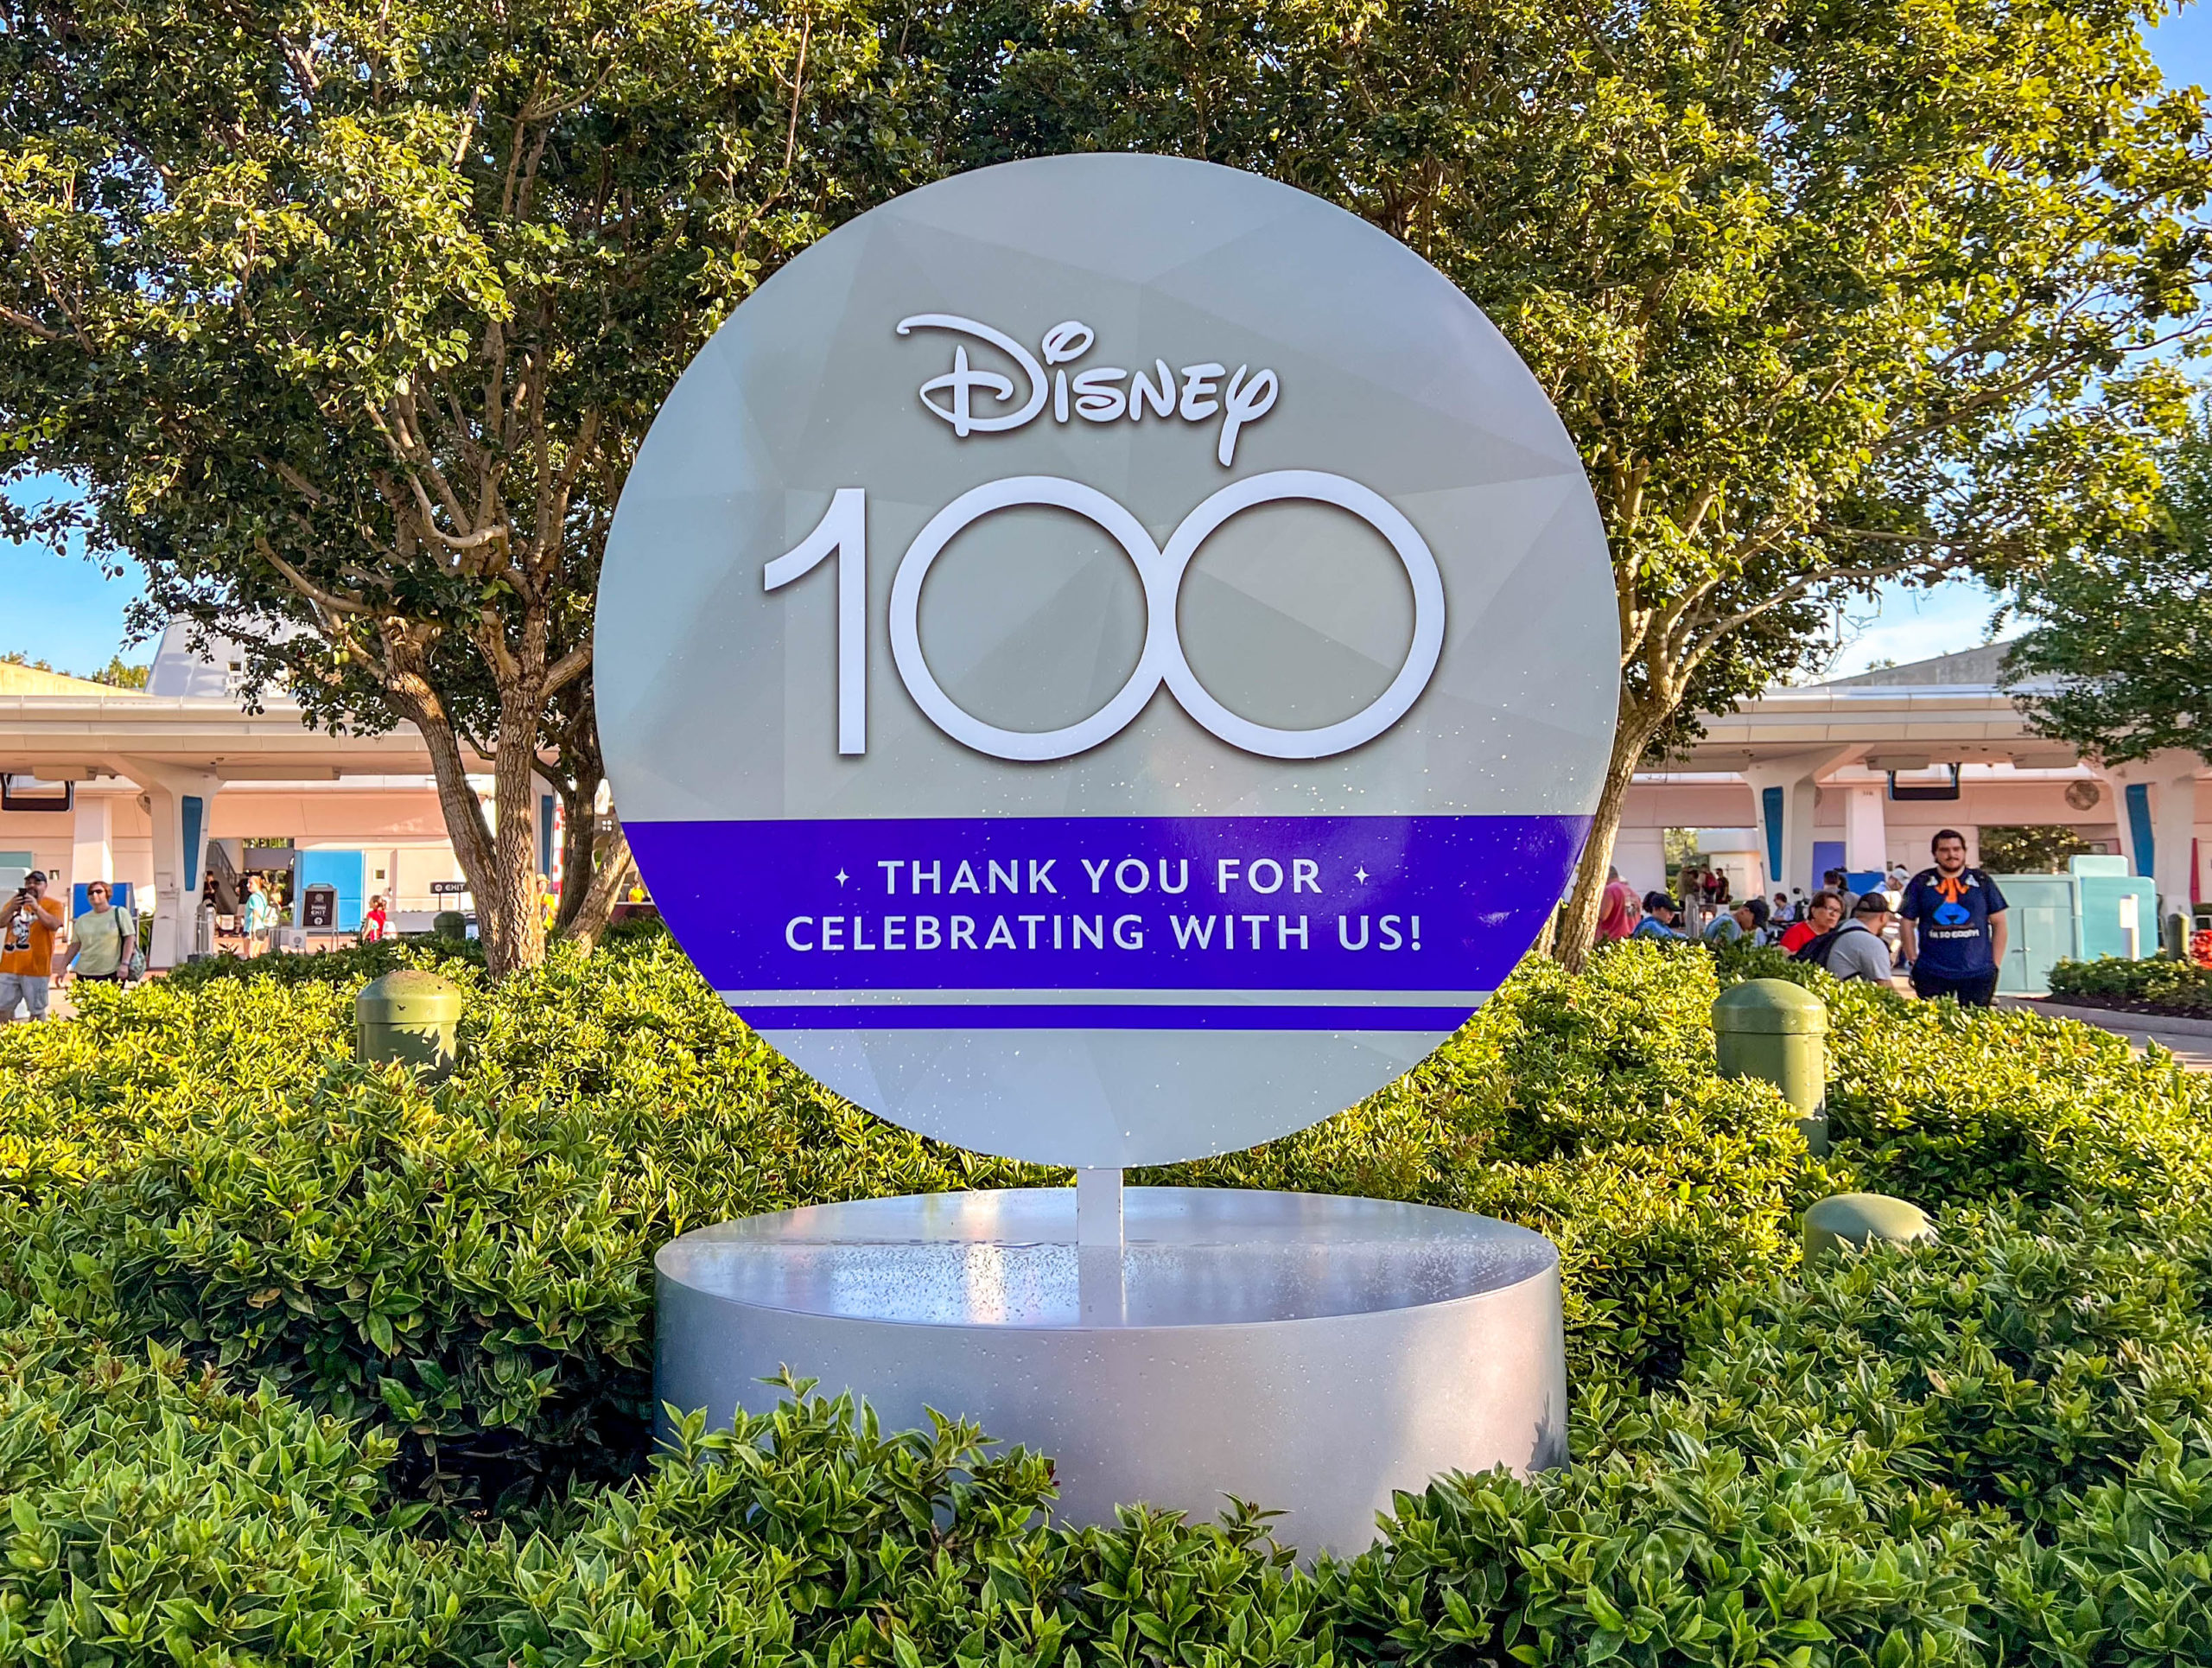 Disney100 in EPCOT